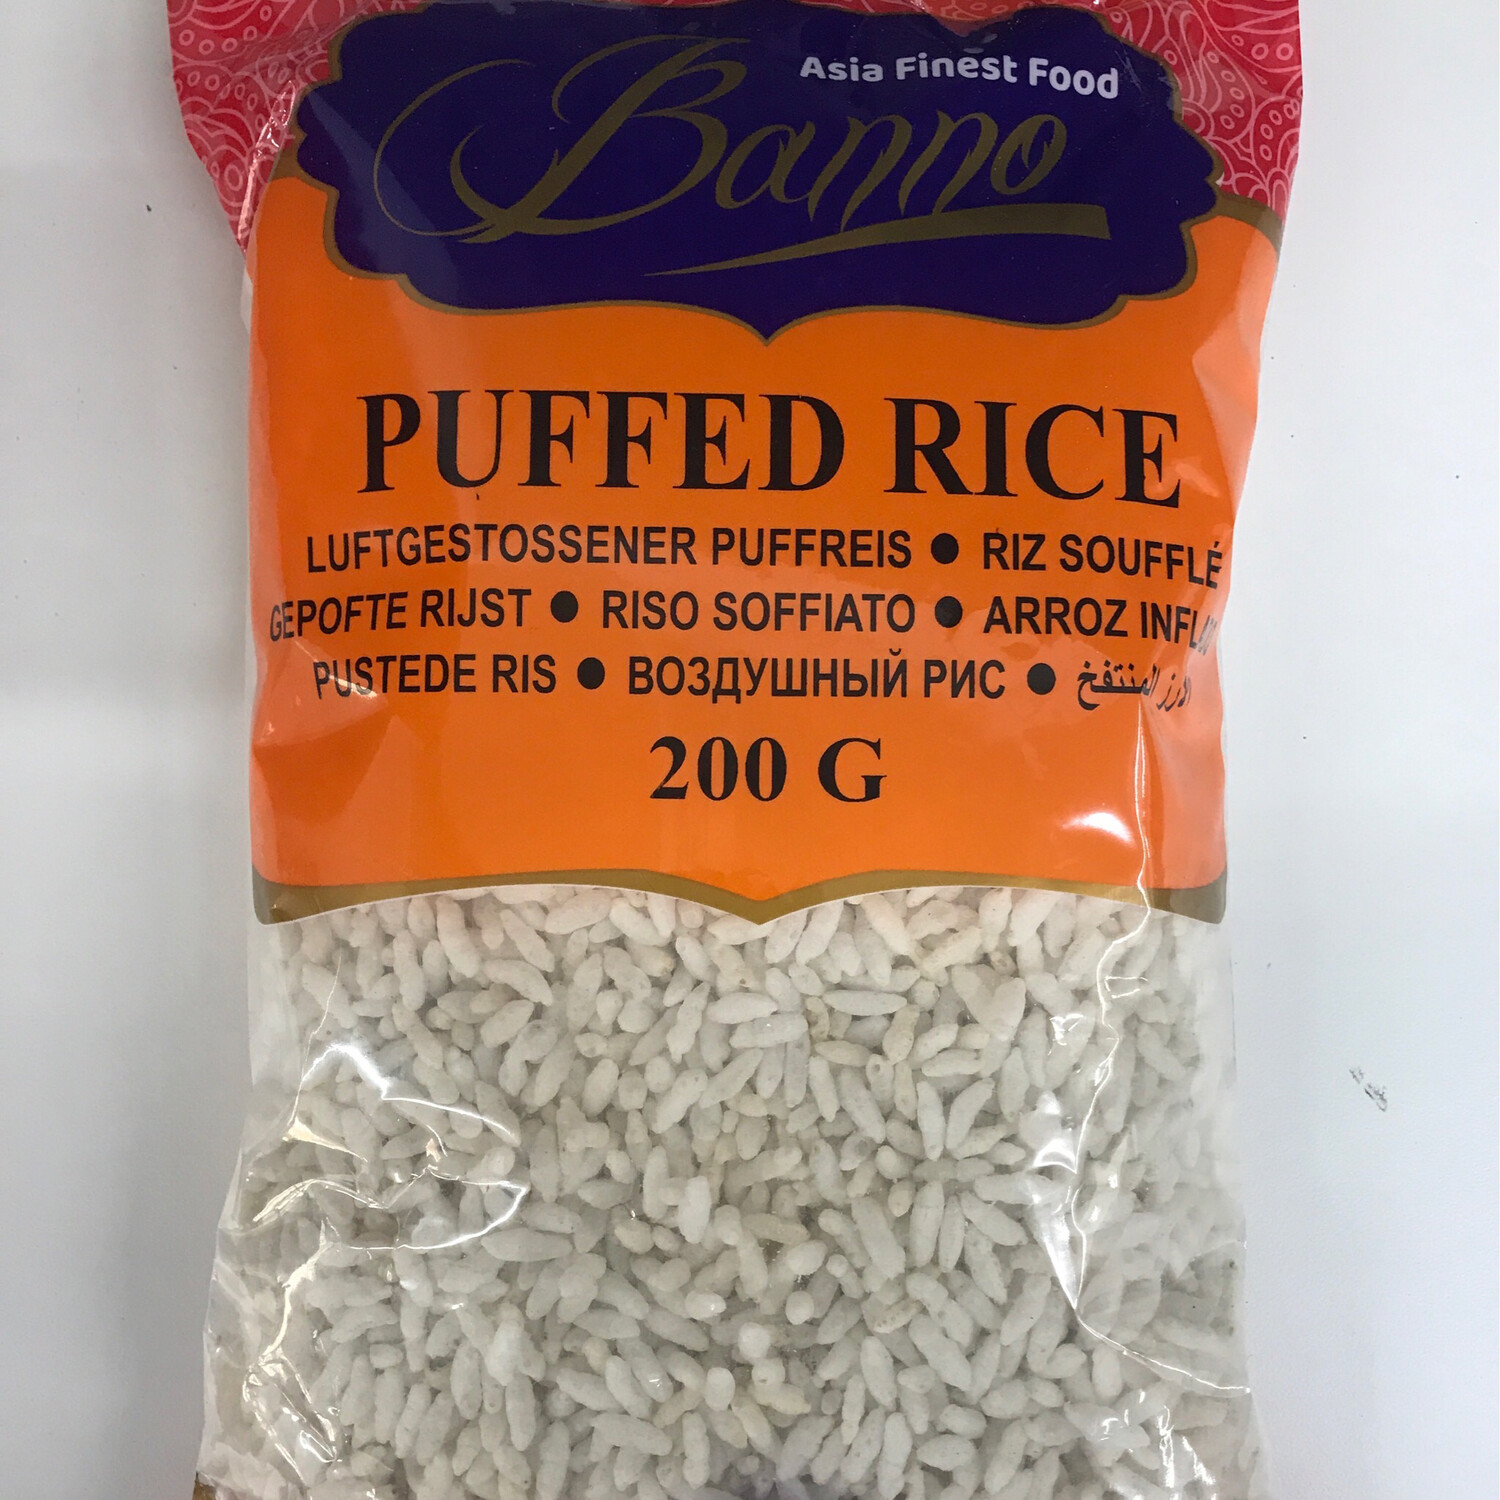 Banno Puffed Rice 400g